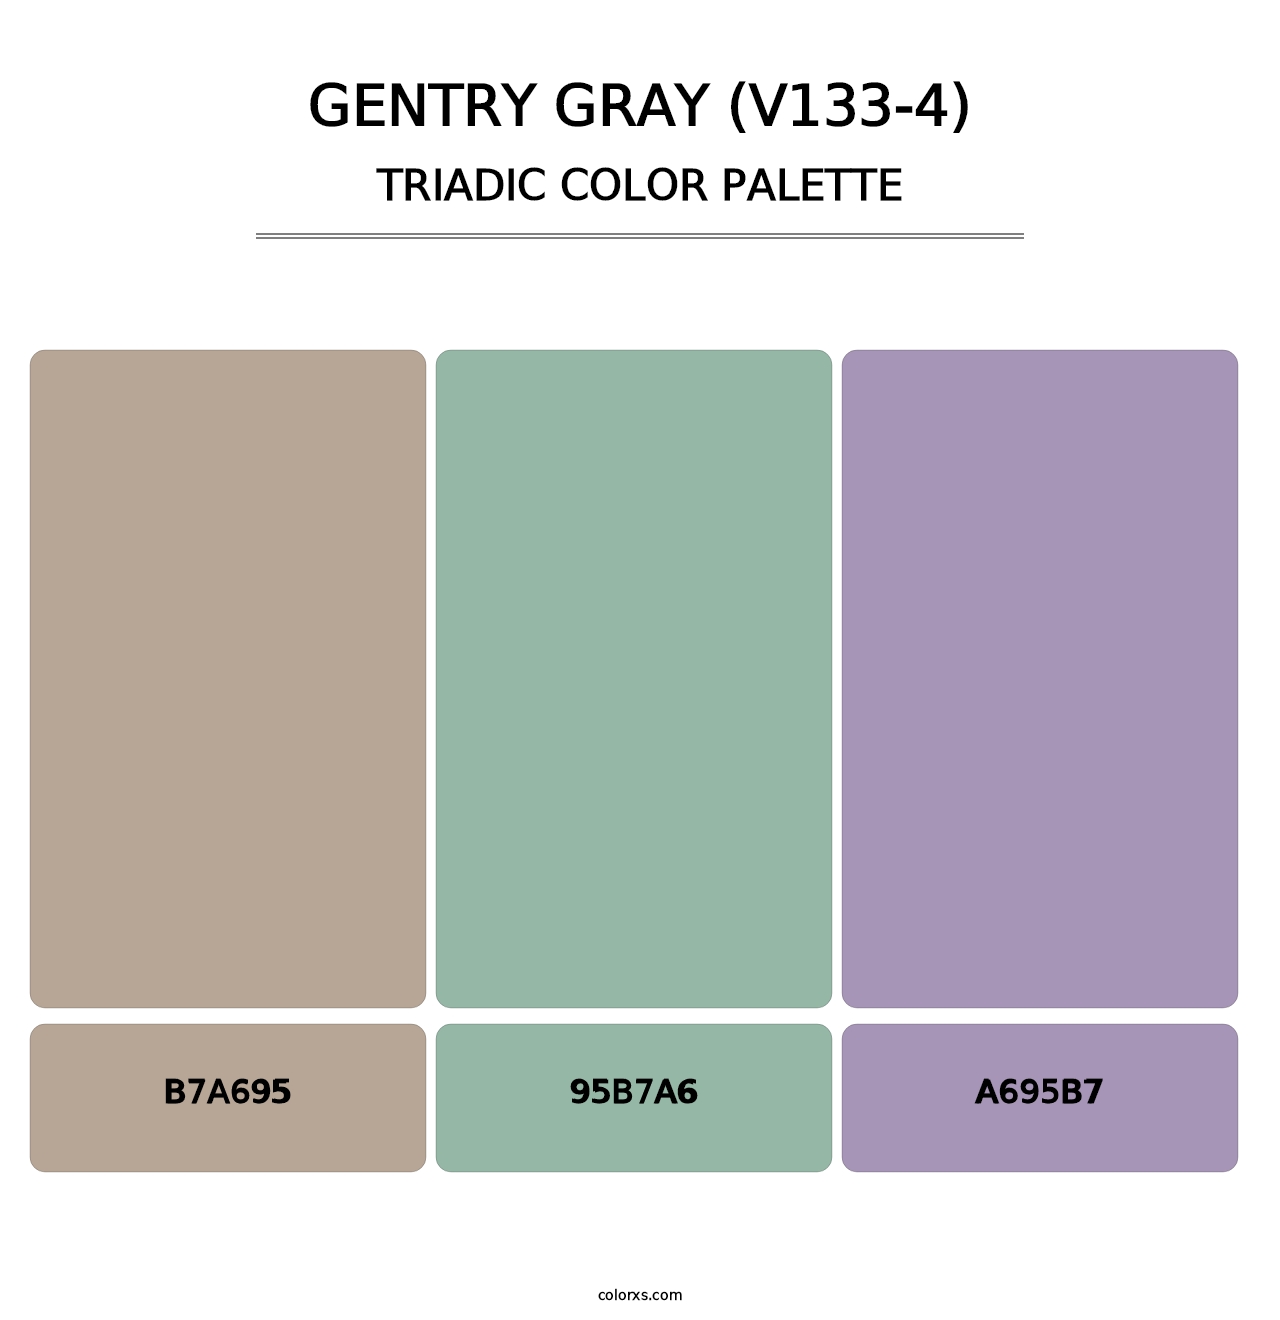 Gentry Gray (V133-4) - Triadic Color Palette